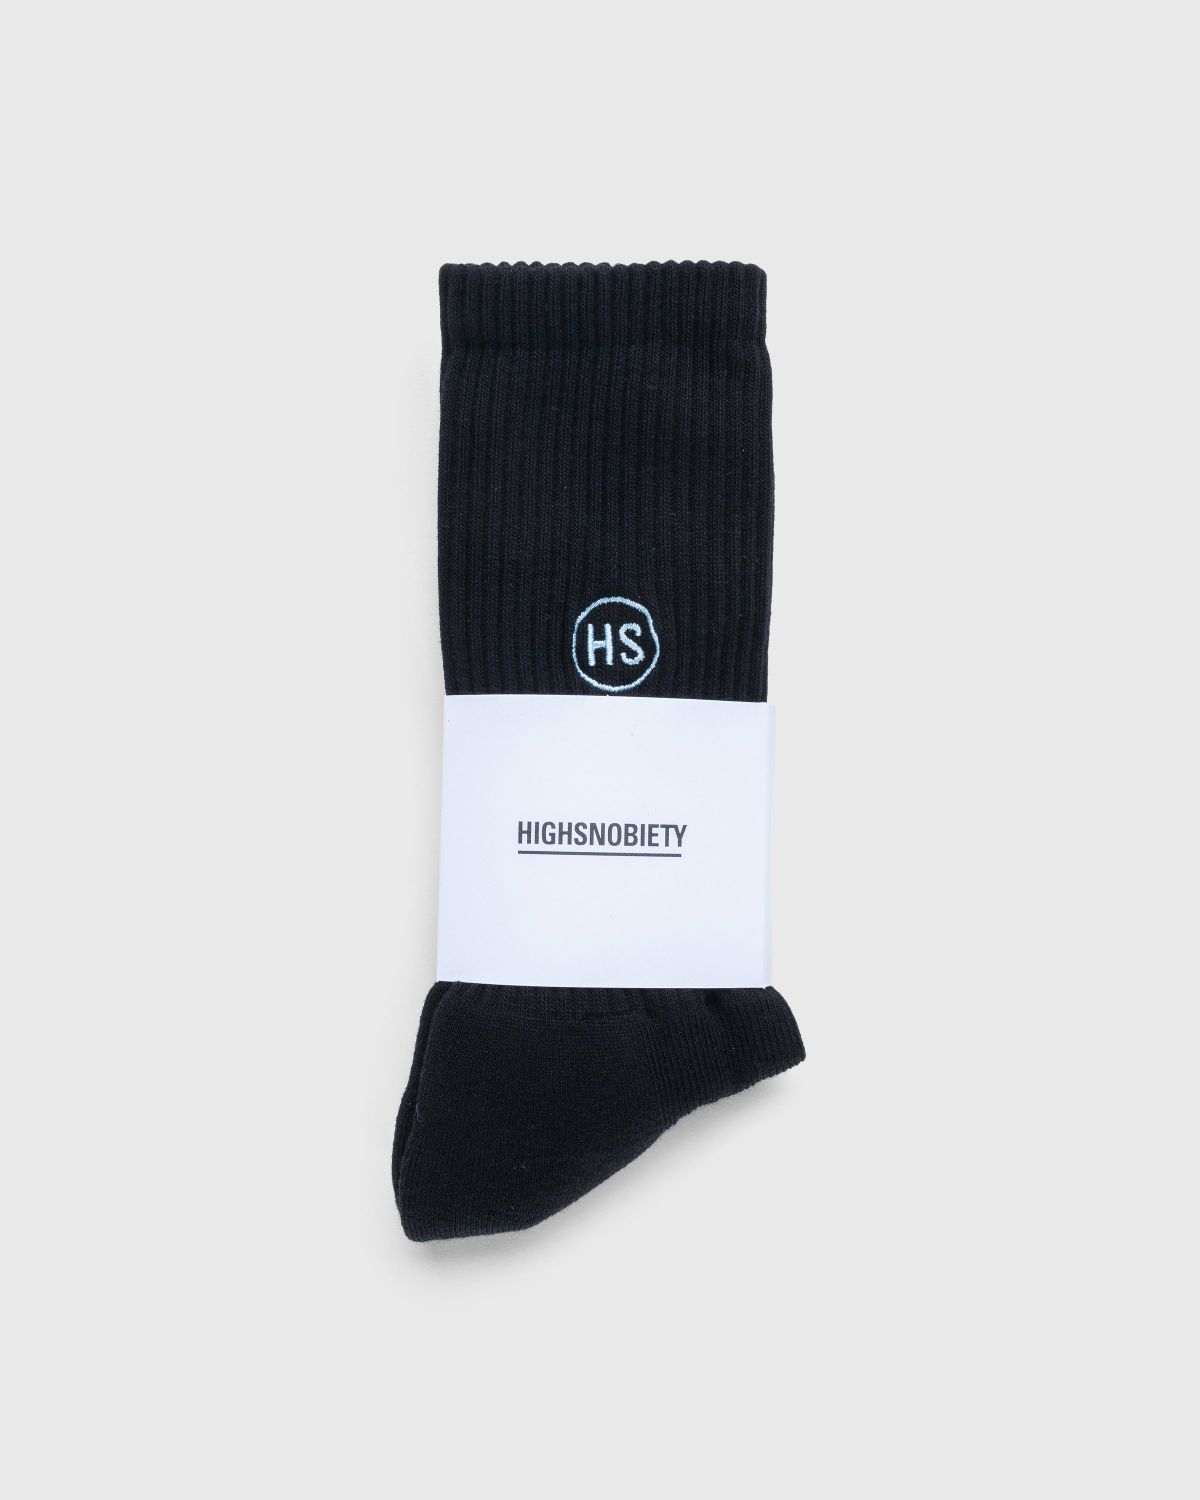 Highsnobiety – Logo Socks Black - Socks - Black - Image 1